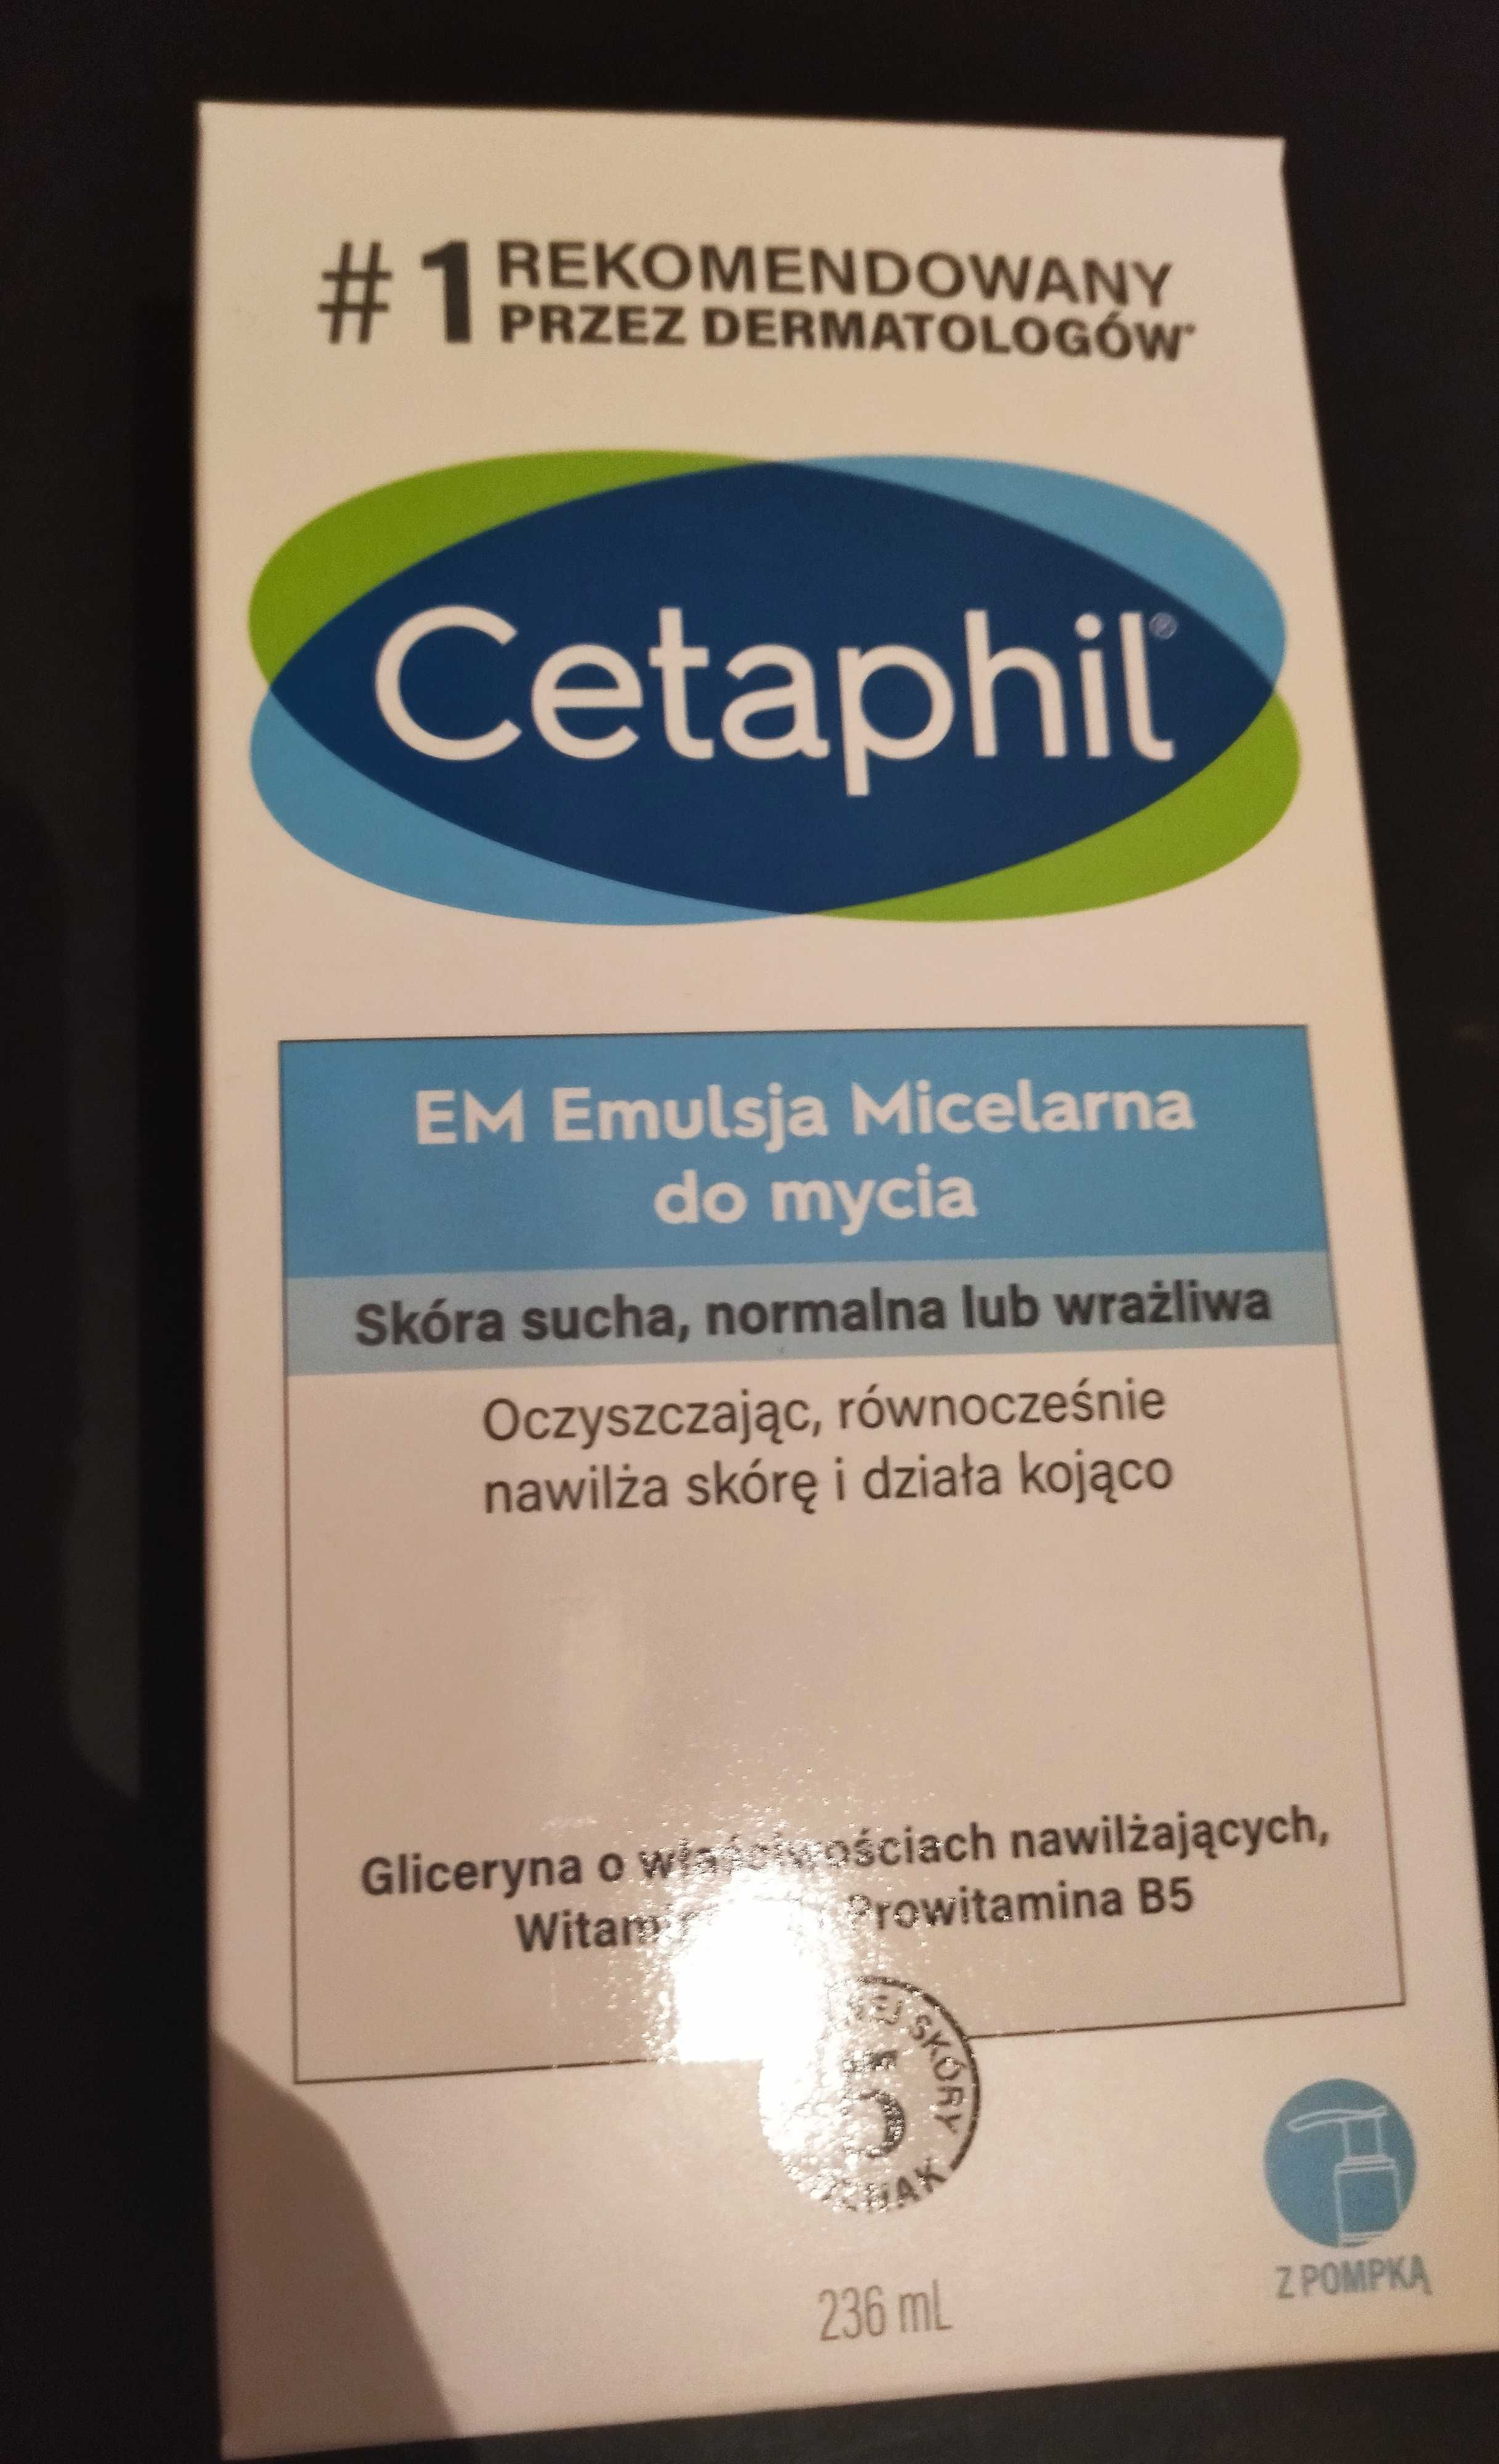 Cetaphil EM, emulsja micelarna do mycia, 236 ml